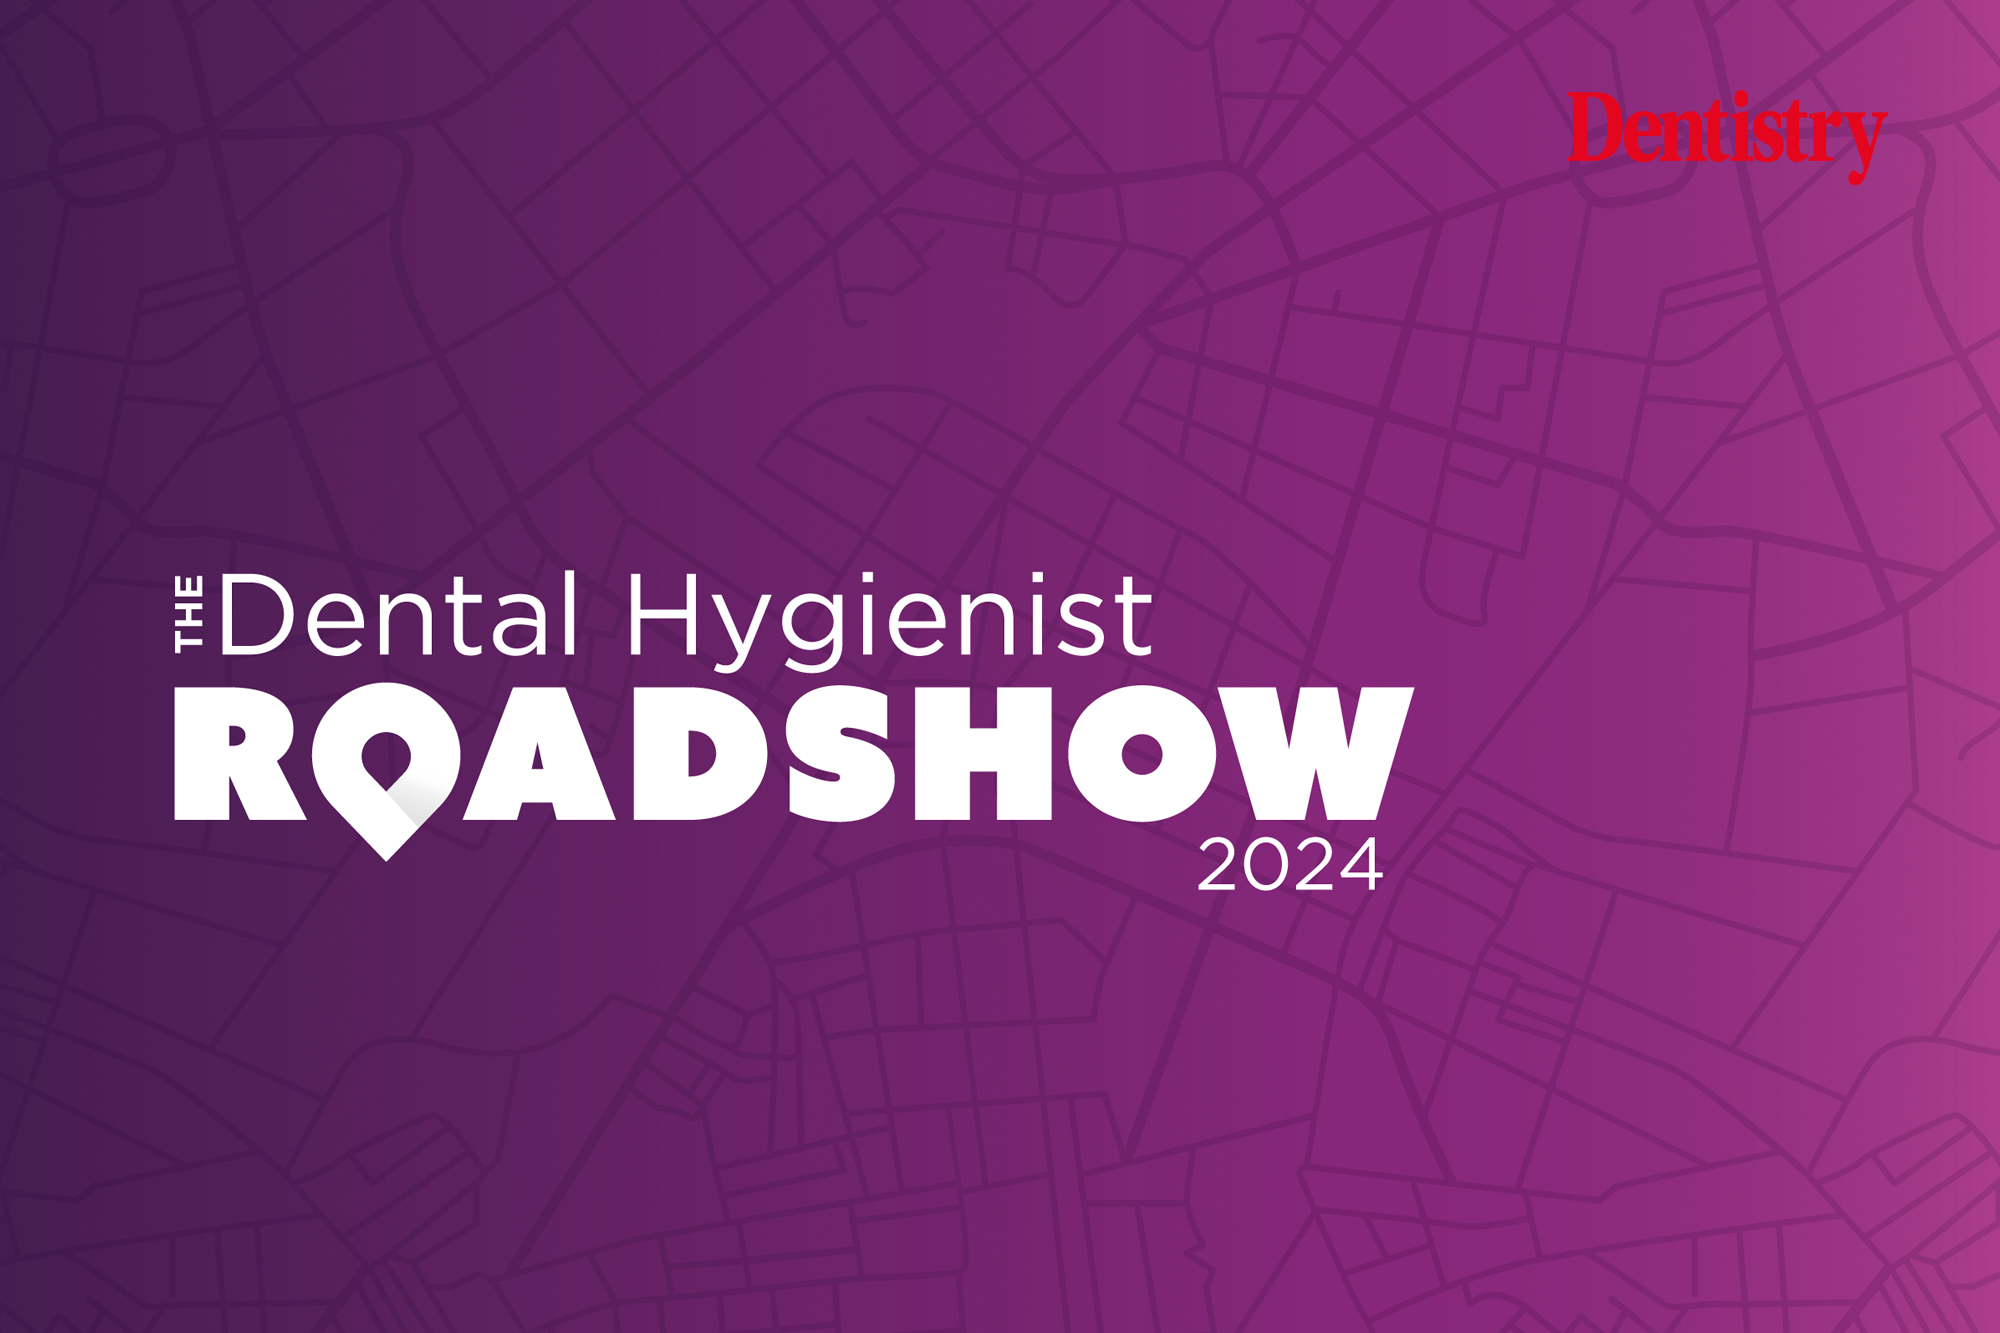 Listerine Dental Hygienist Roadshow 2024